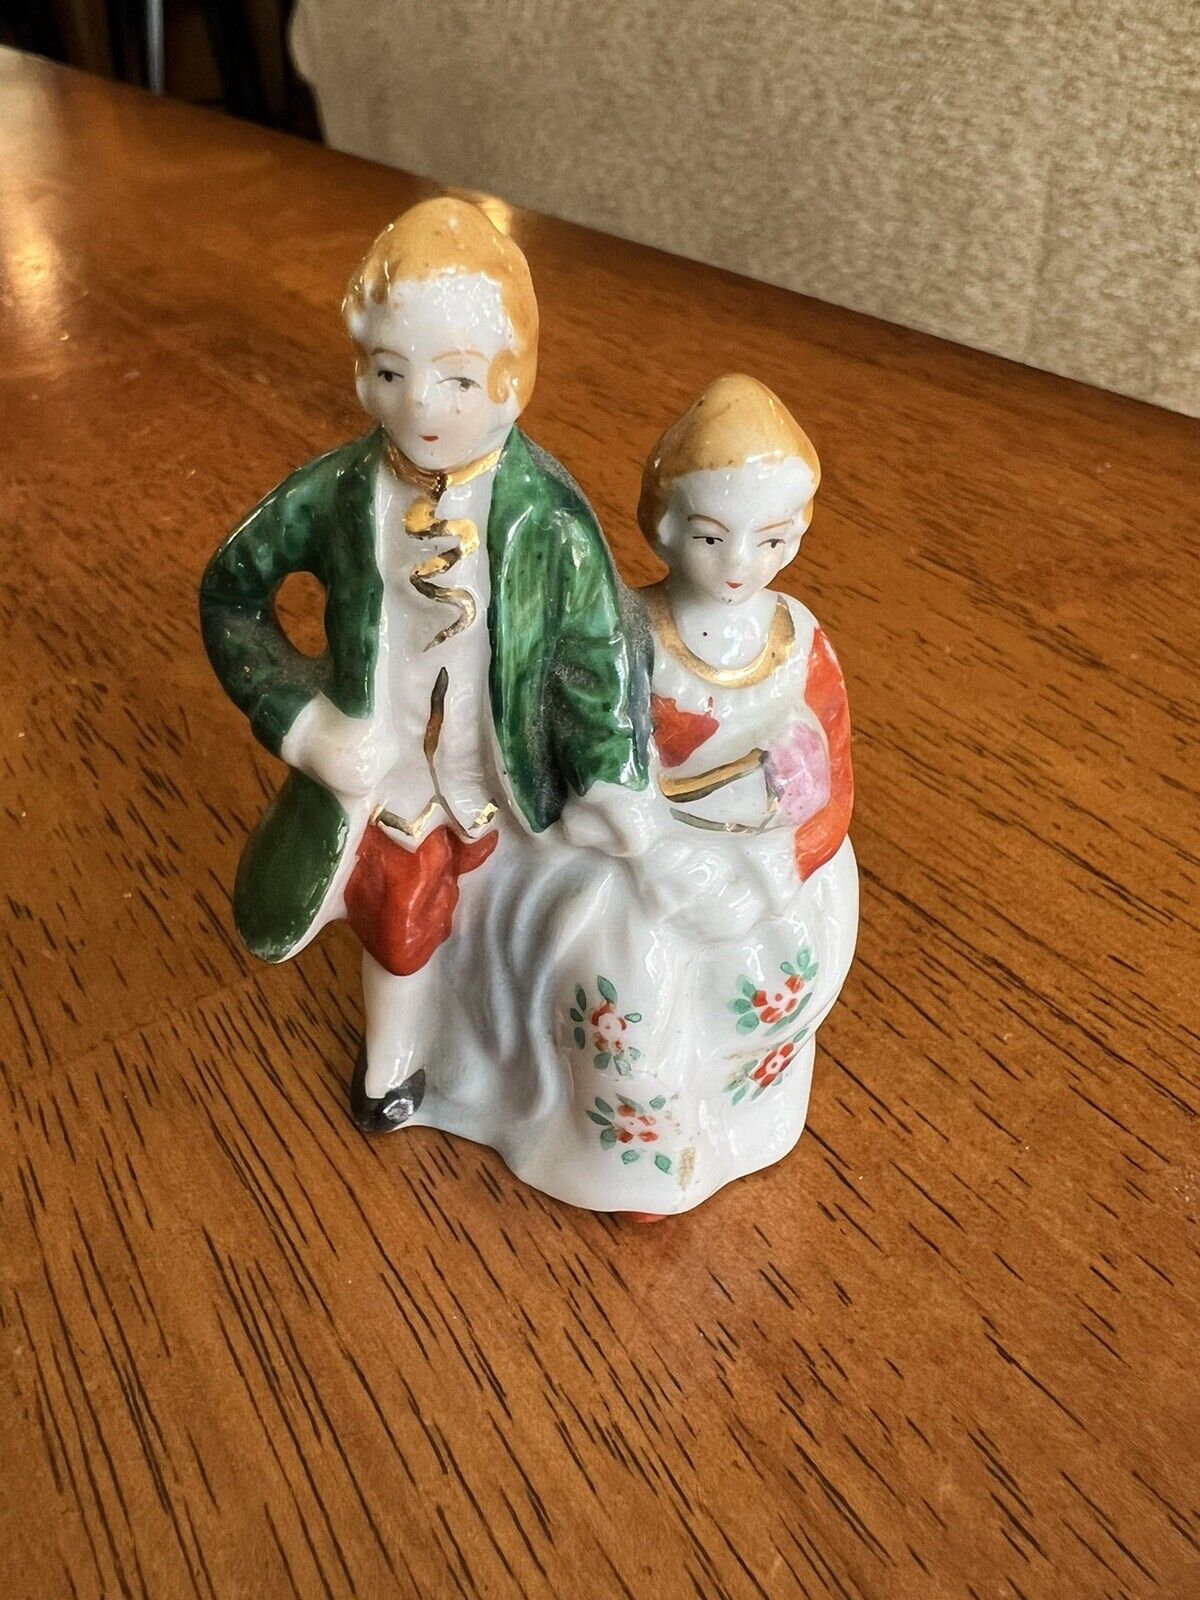 Vintage Occupied Japan Couple Figurine Colonial Victorian Couple Miniature 3”